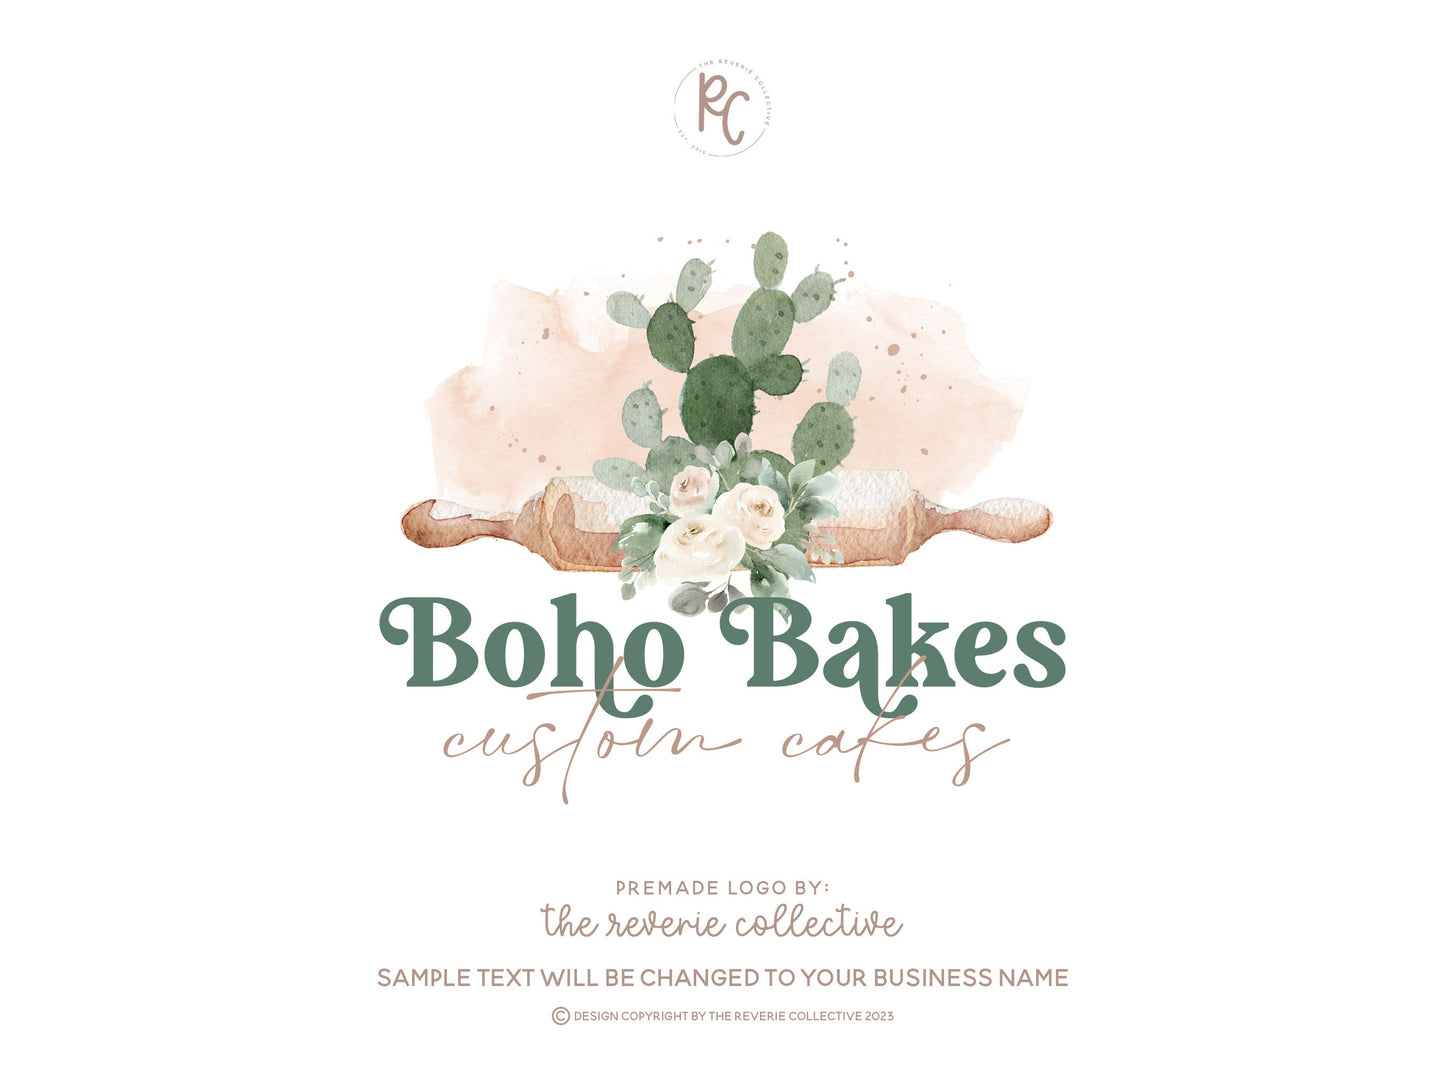 Boho Bakes | Premade Logo Design | Modern Bohemian, Cactus, Rolling Pin